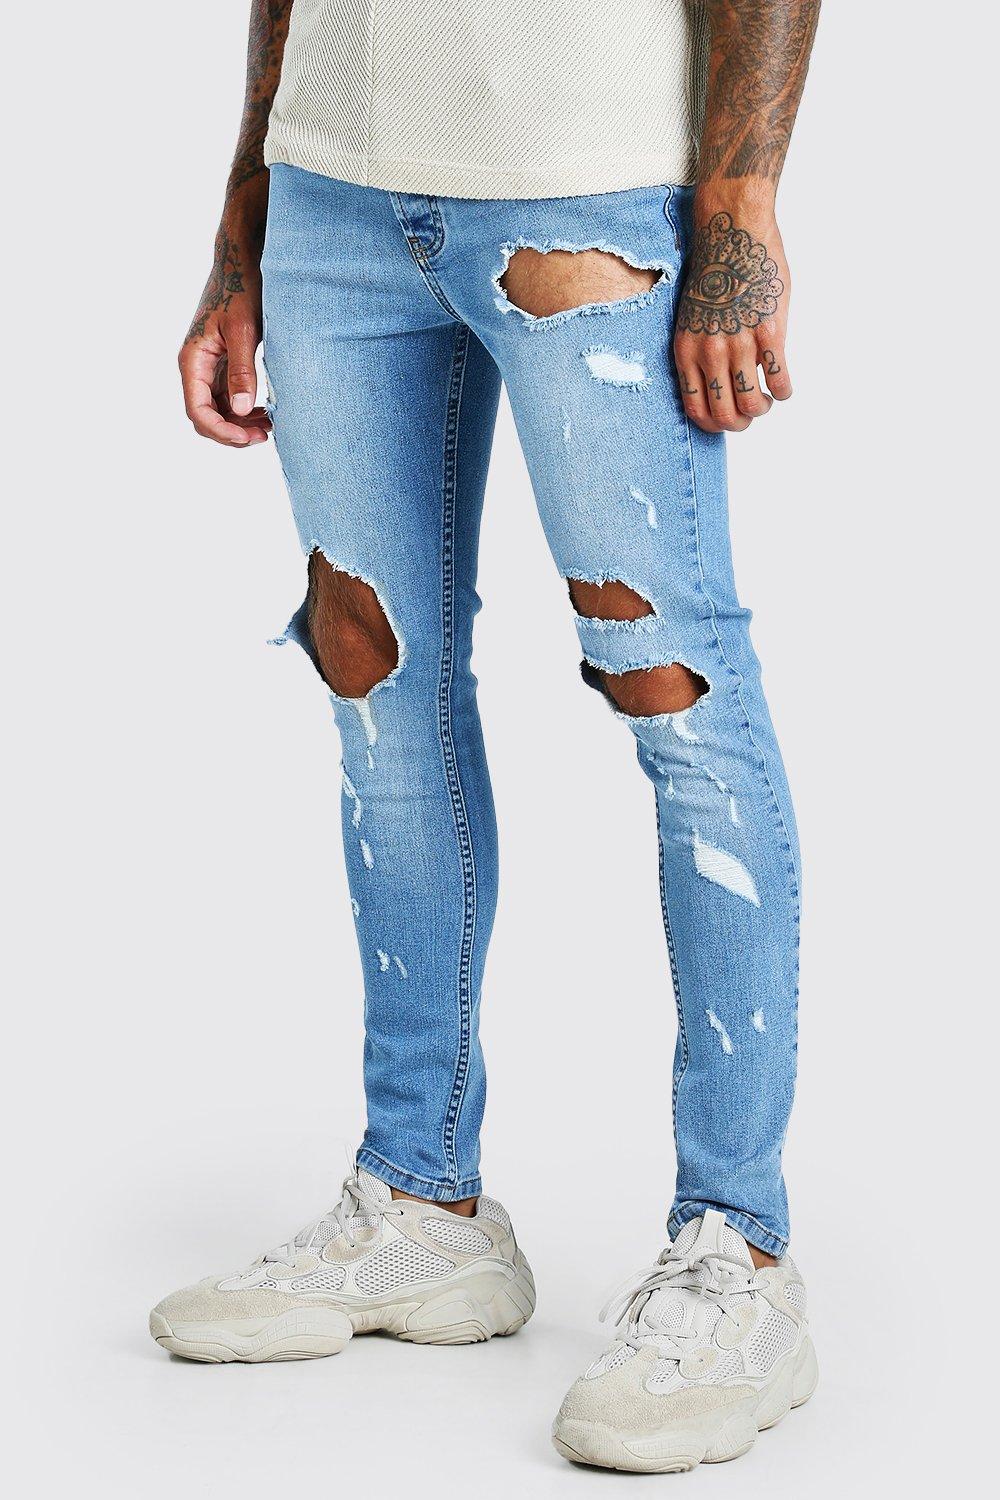 kdnk skinny jeans